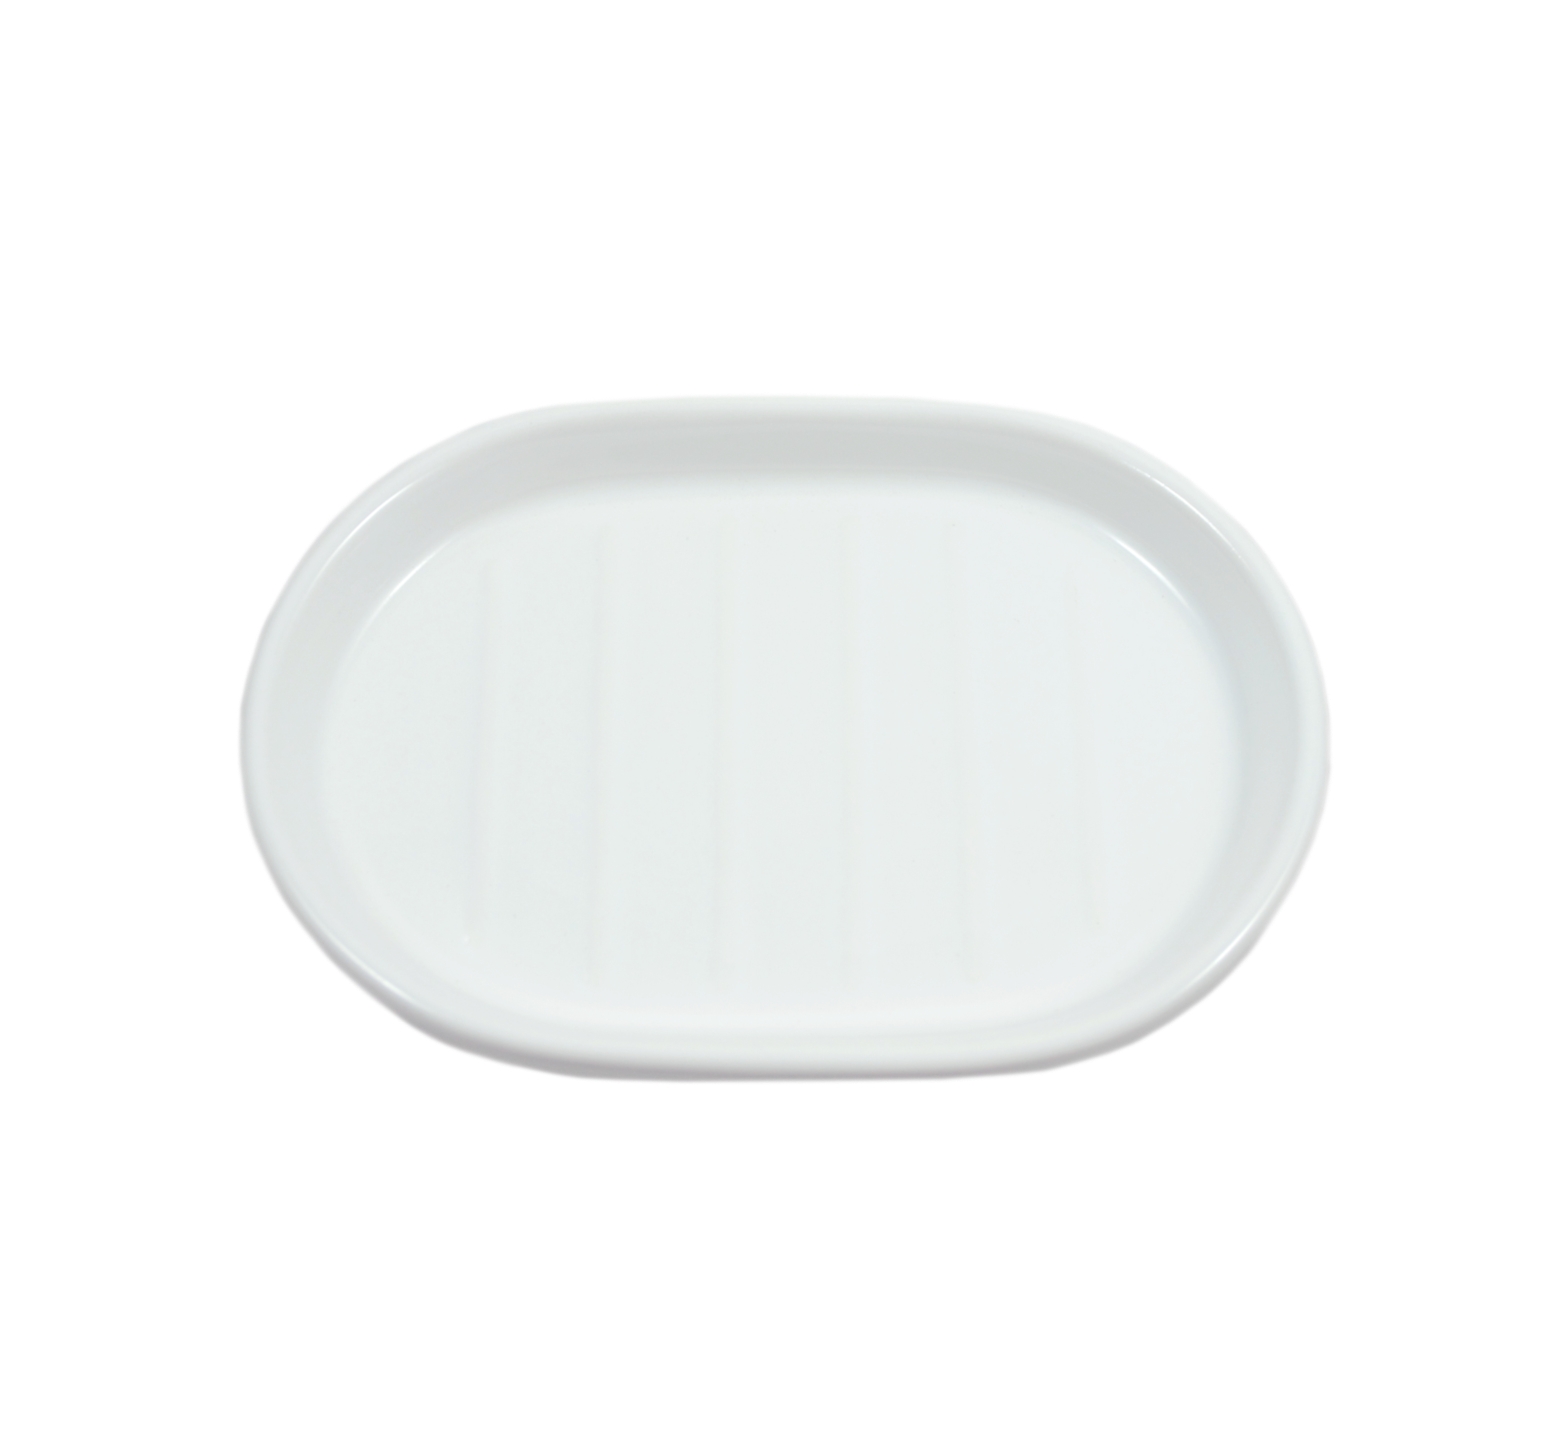 White ceramic bath soap case - Italian product